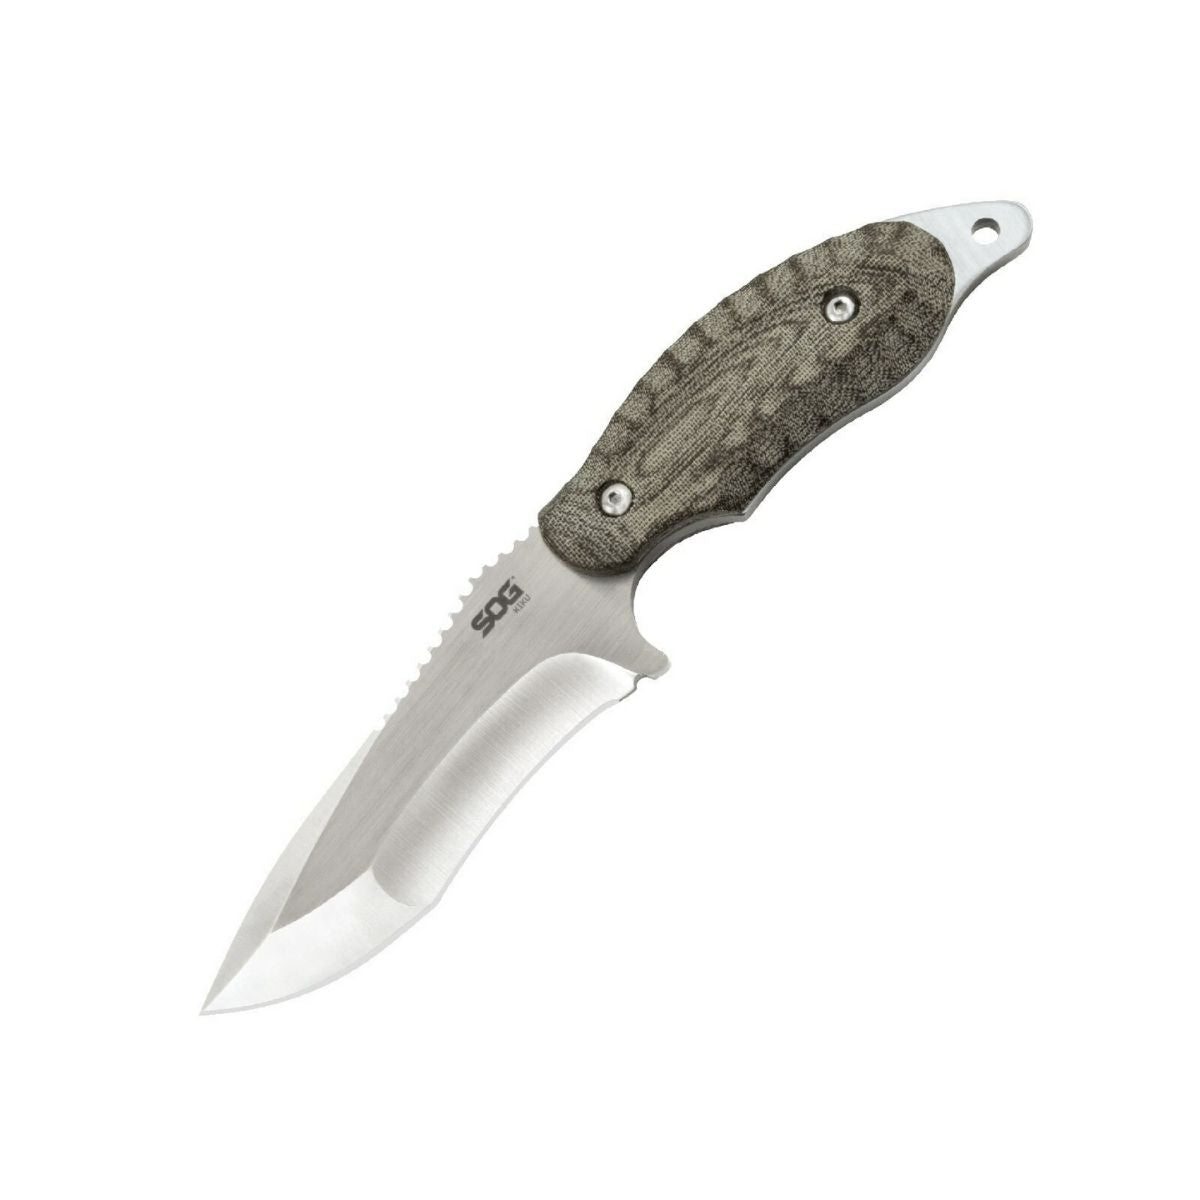 Kiku 4 Inch Fixed Blade Knife - KU-2022 - Outdoor Travel Gear 2